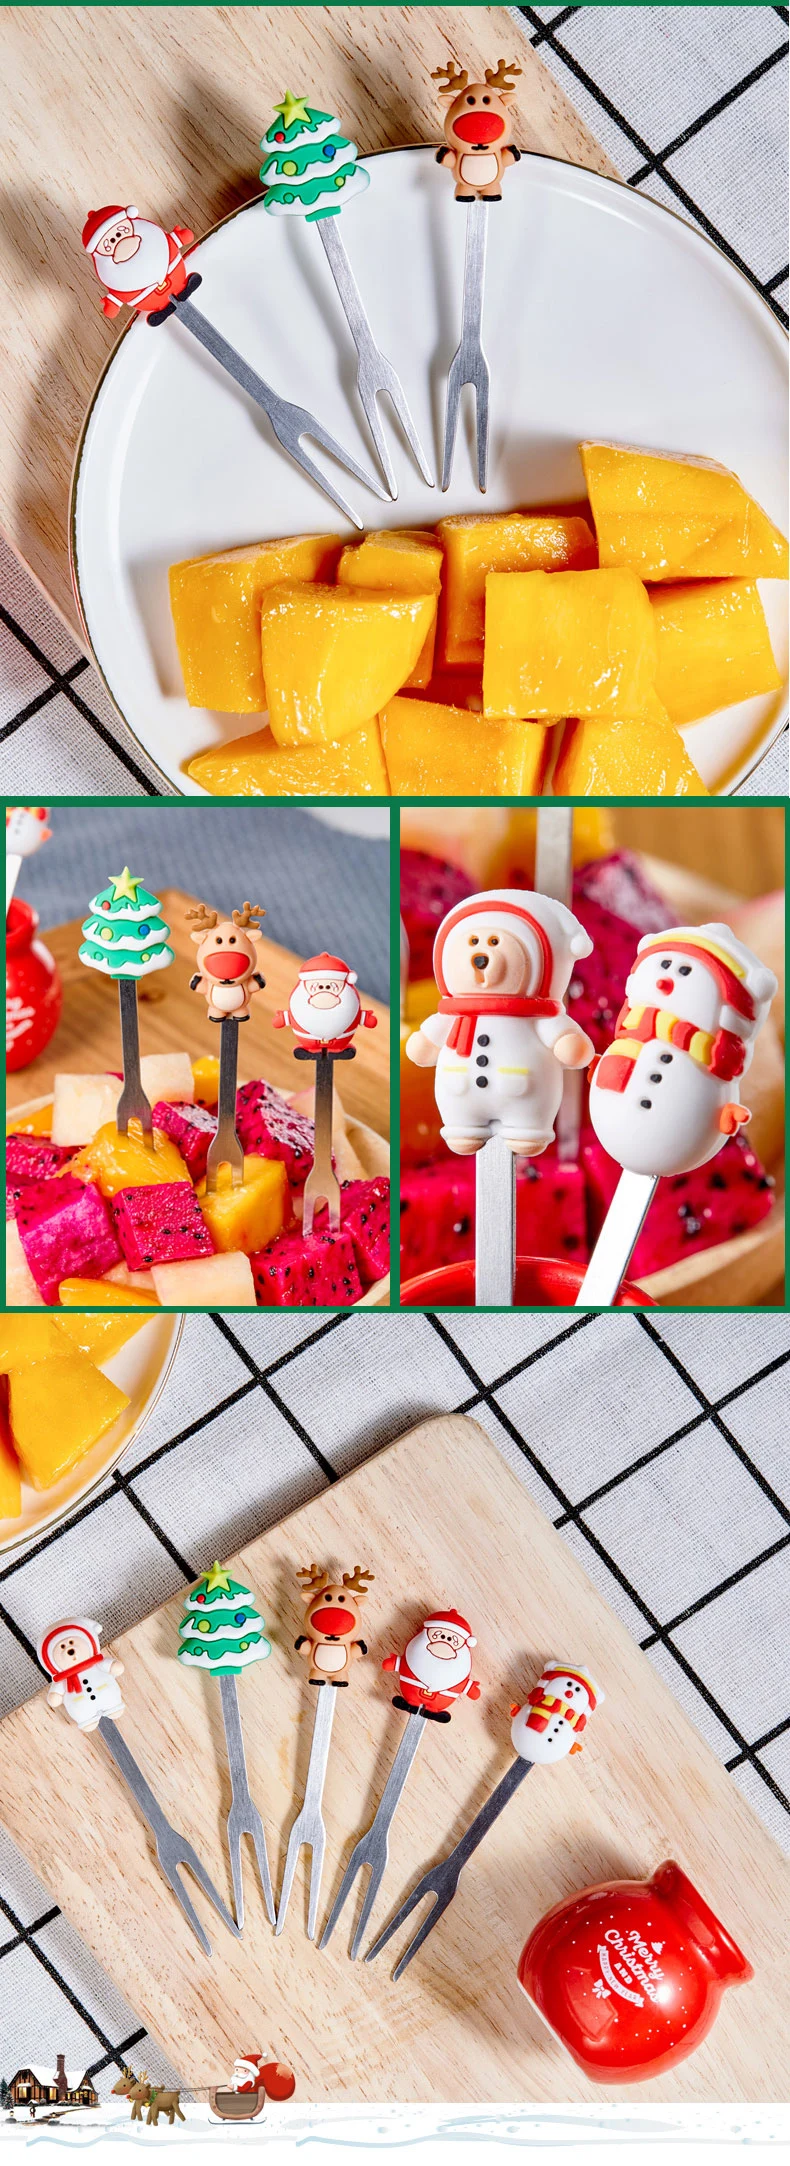 5PCS Set Cute Mini Christmas Stainless Steel Fruit Fork Set